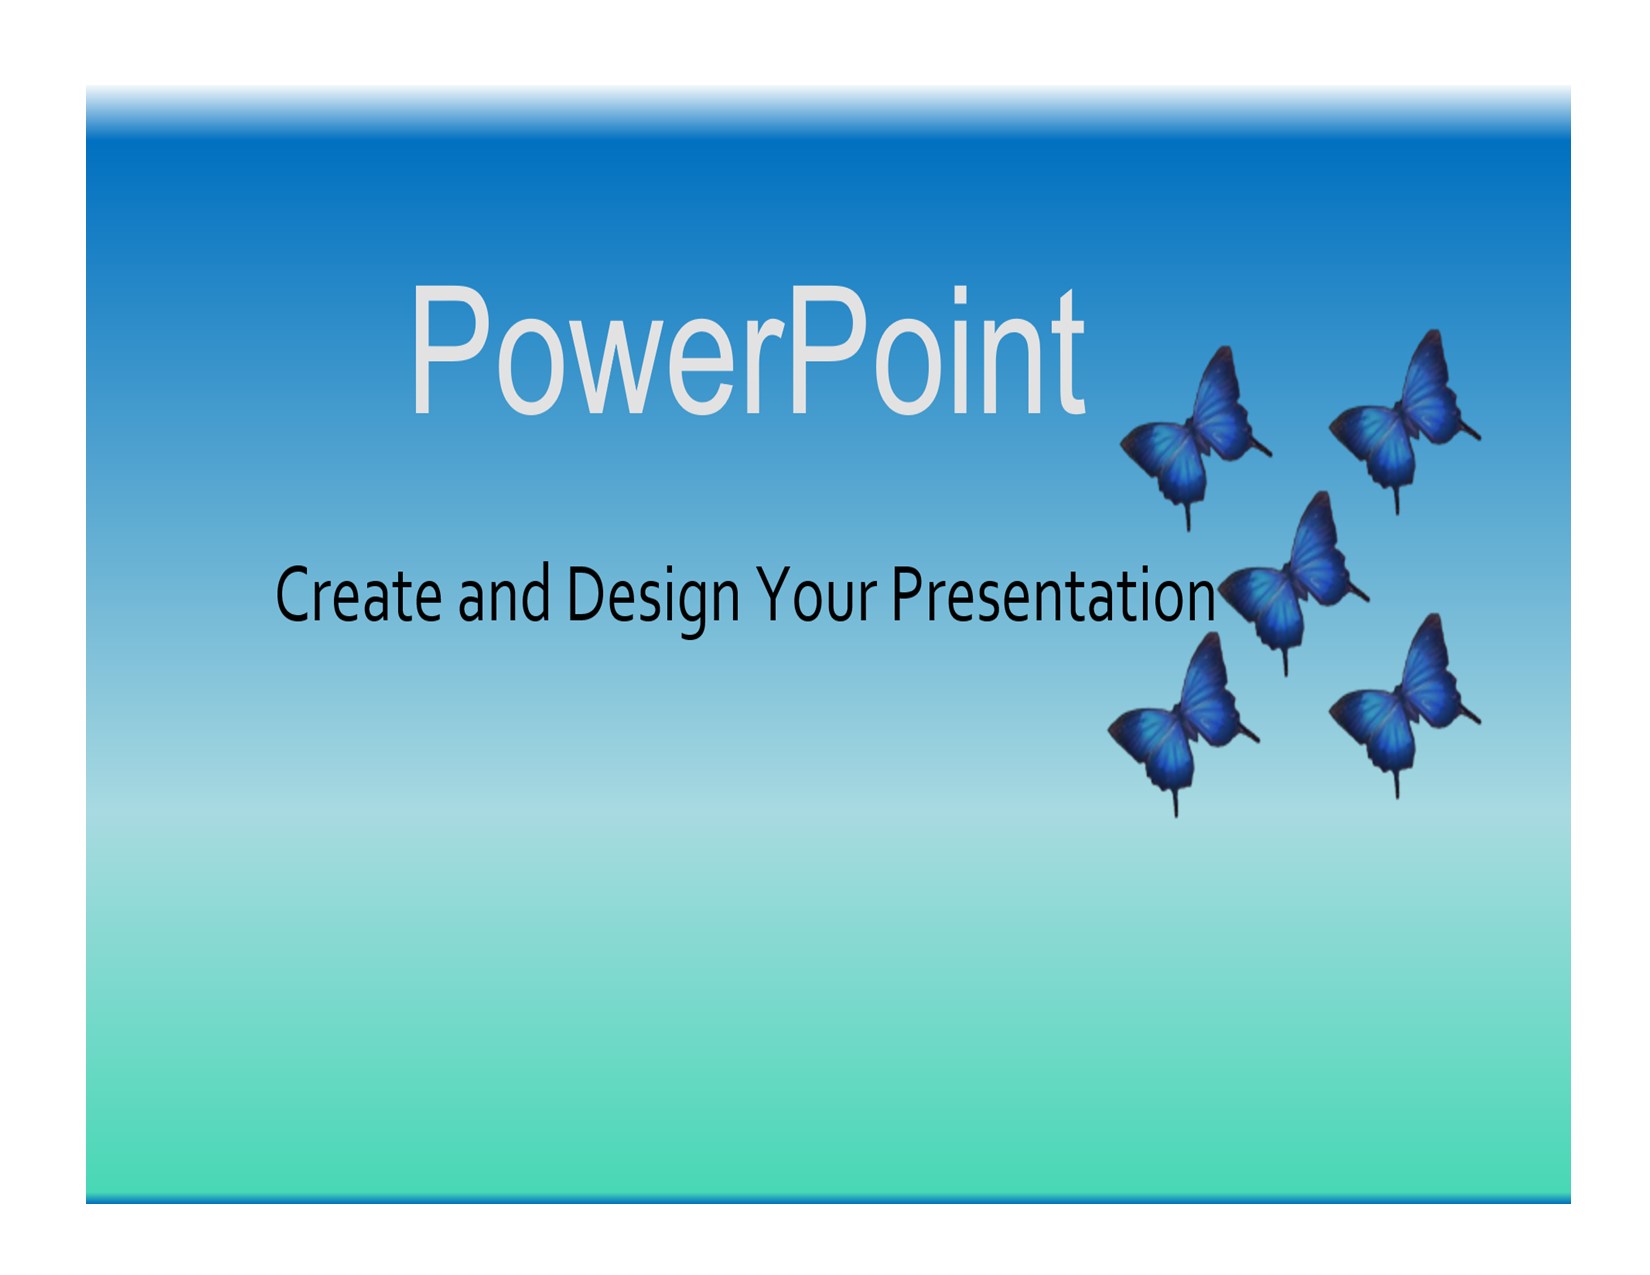 PowerPoint for Beginner title